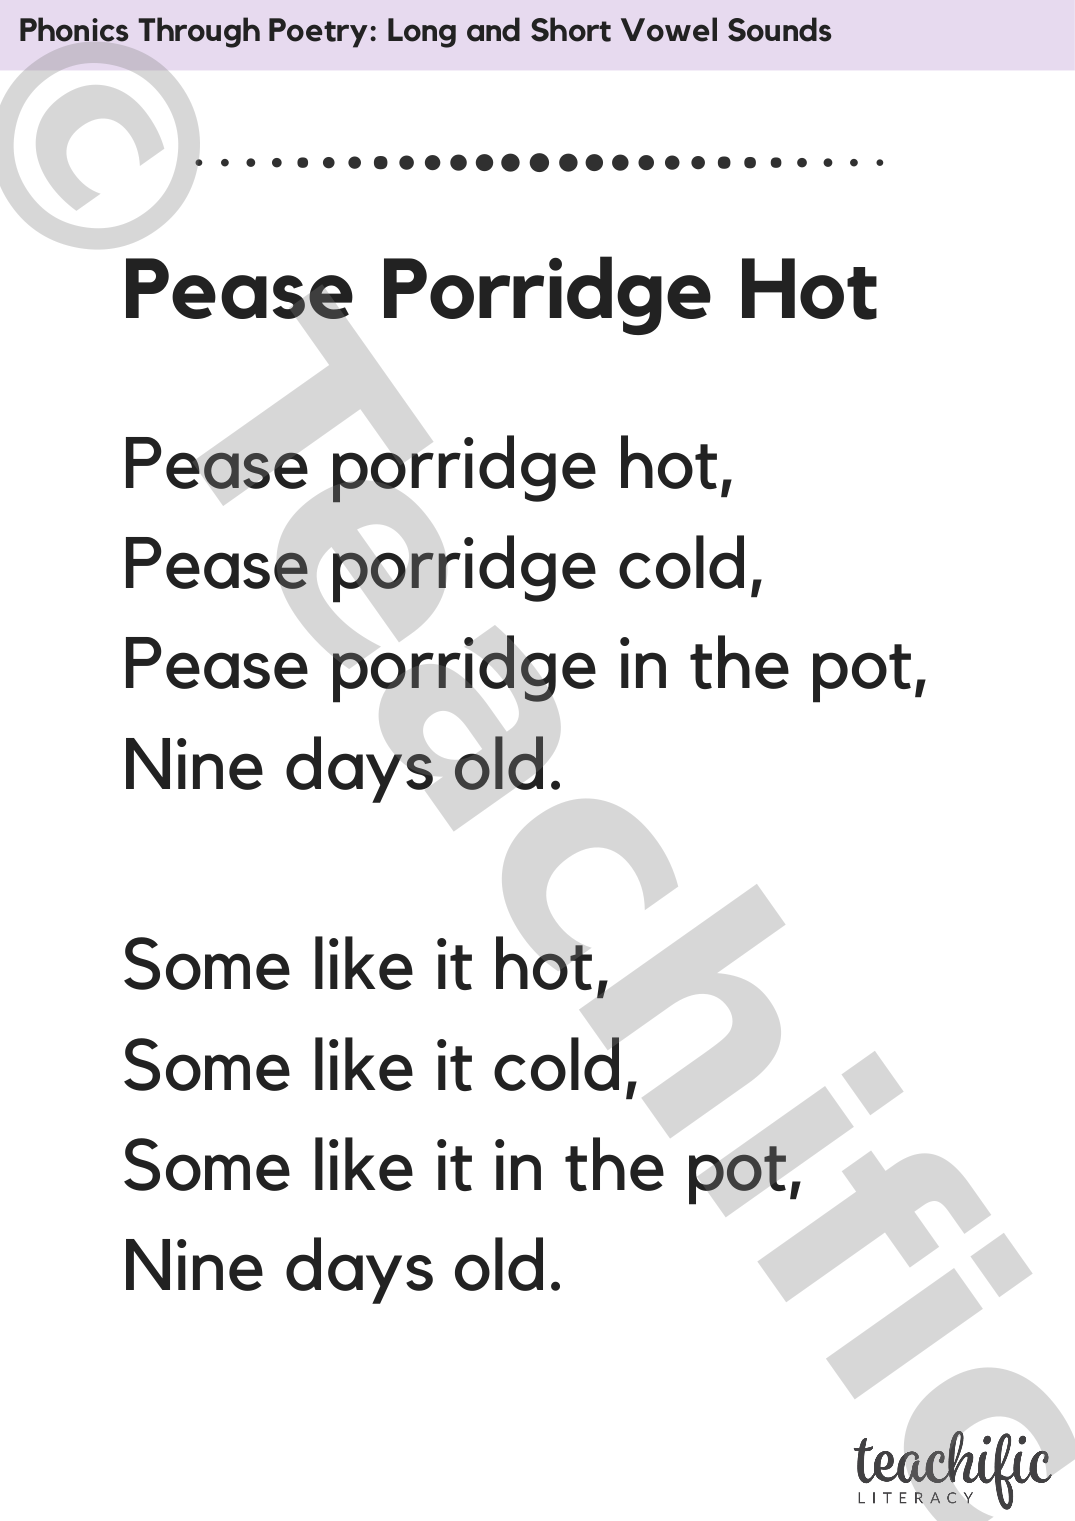 pease porridge hot song